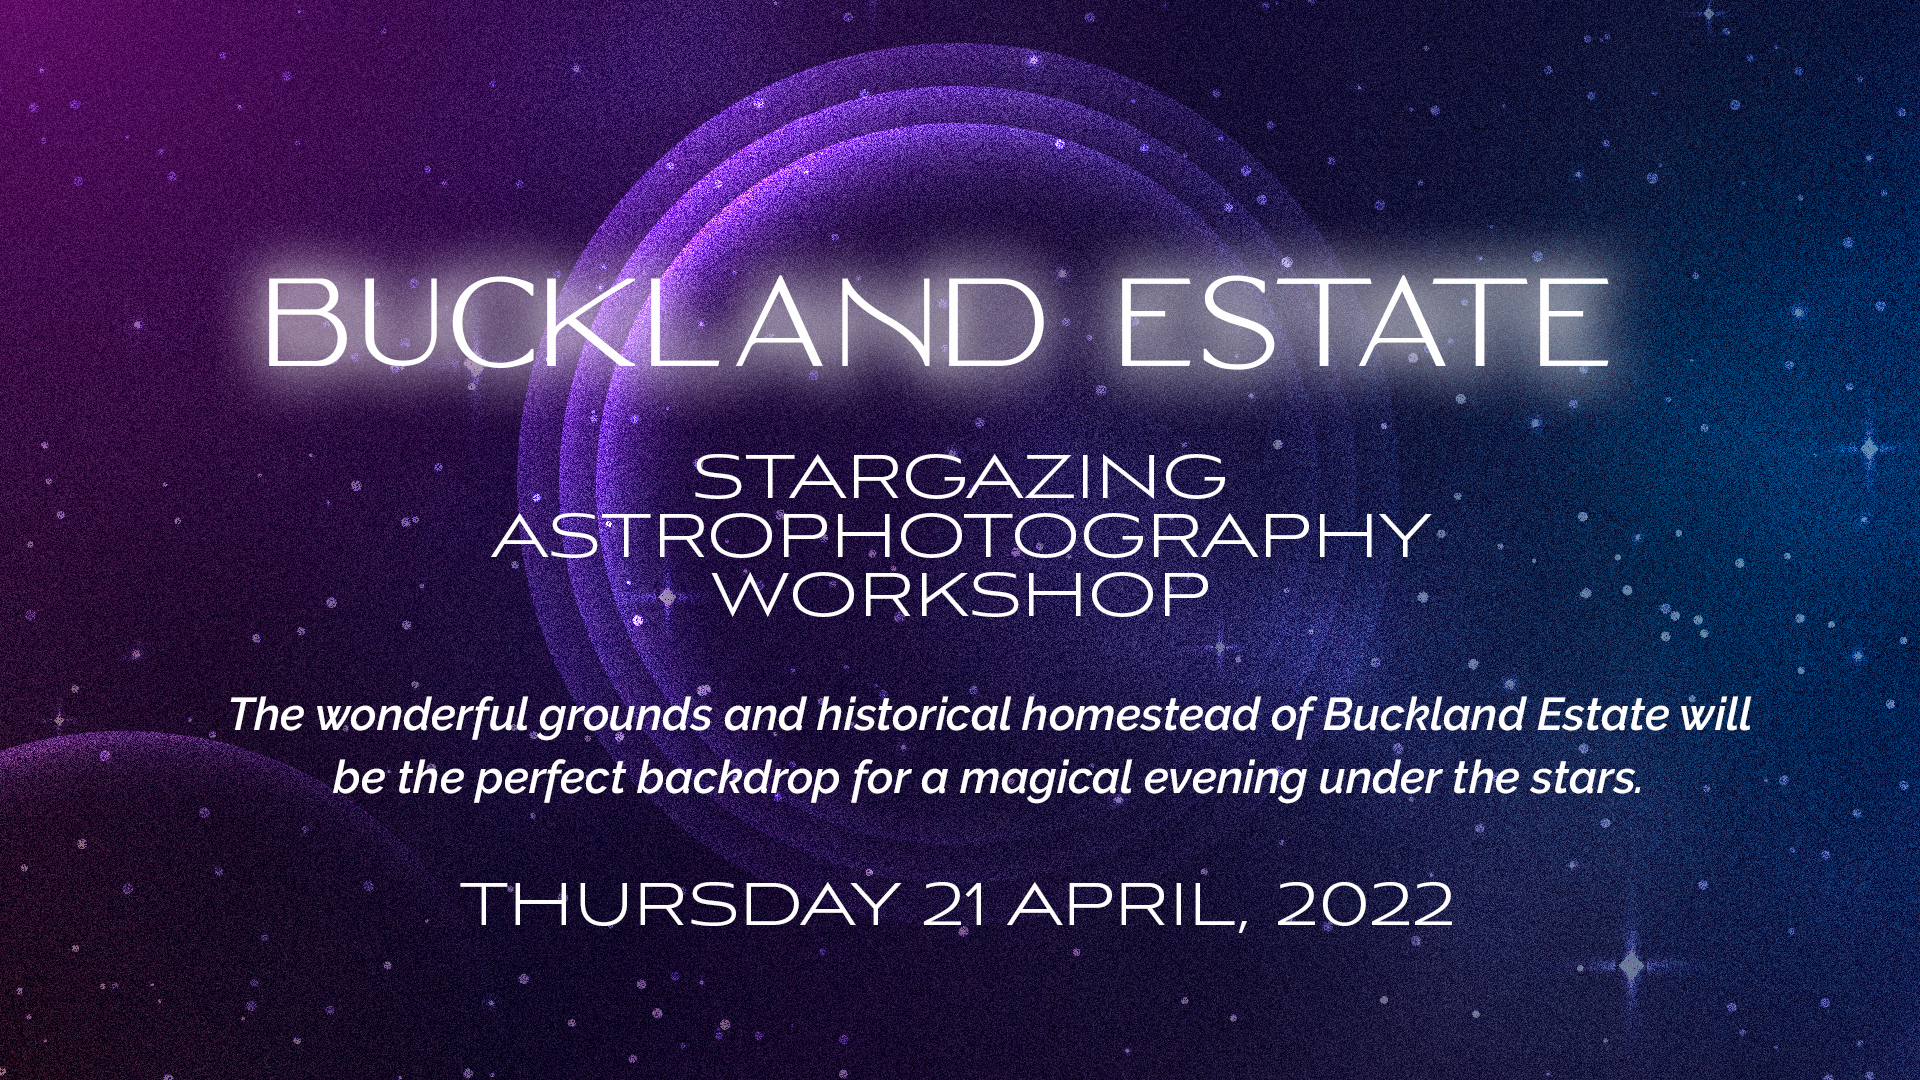 Stargazing Astrophotography Workshop|Buckland Estate